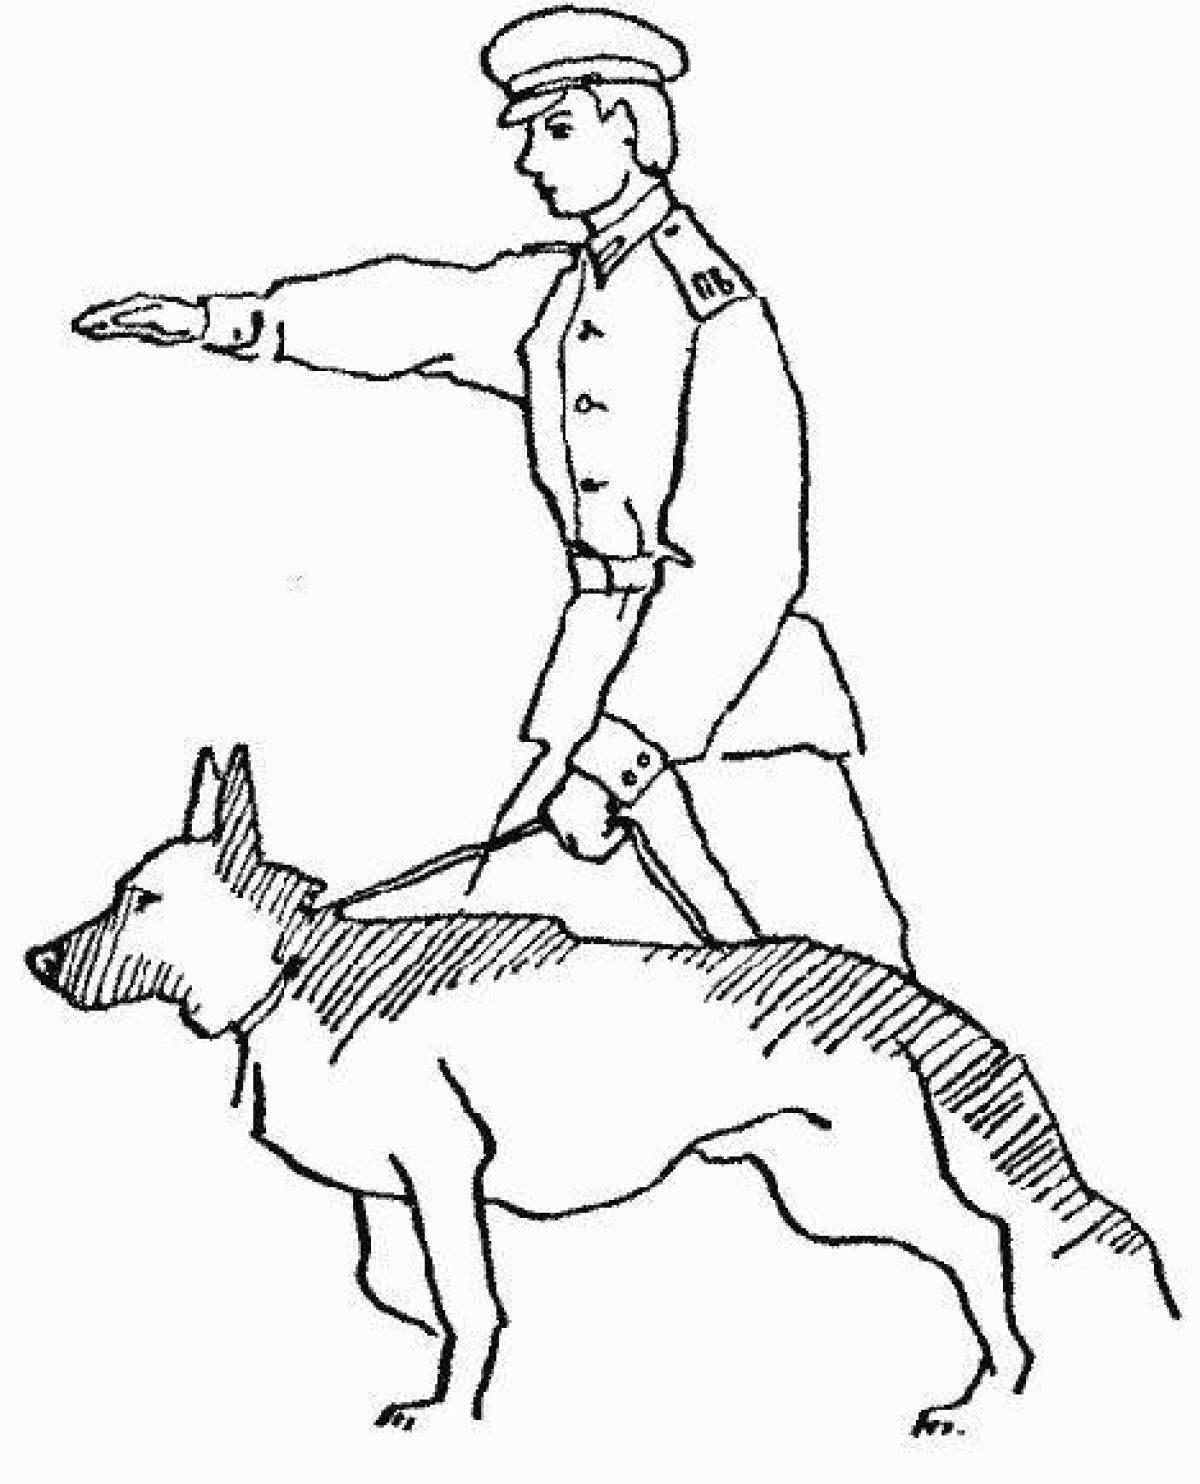 Arrogant border guard with a dog